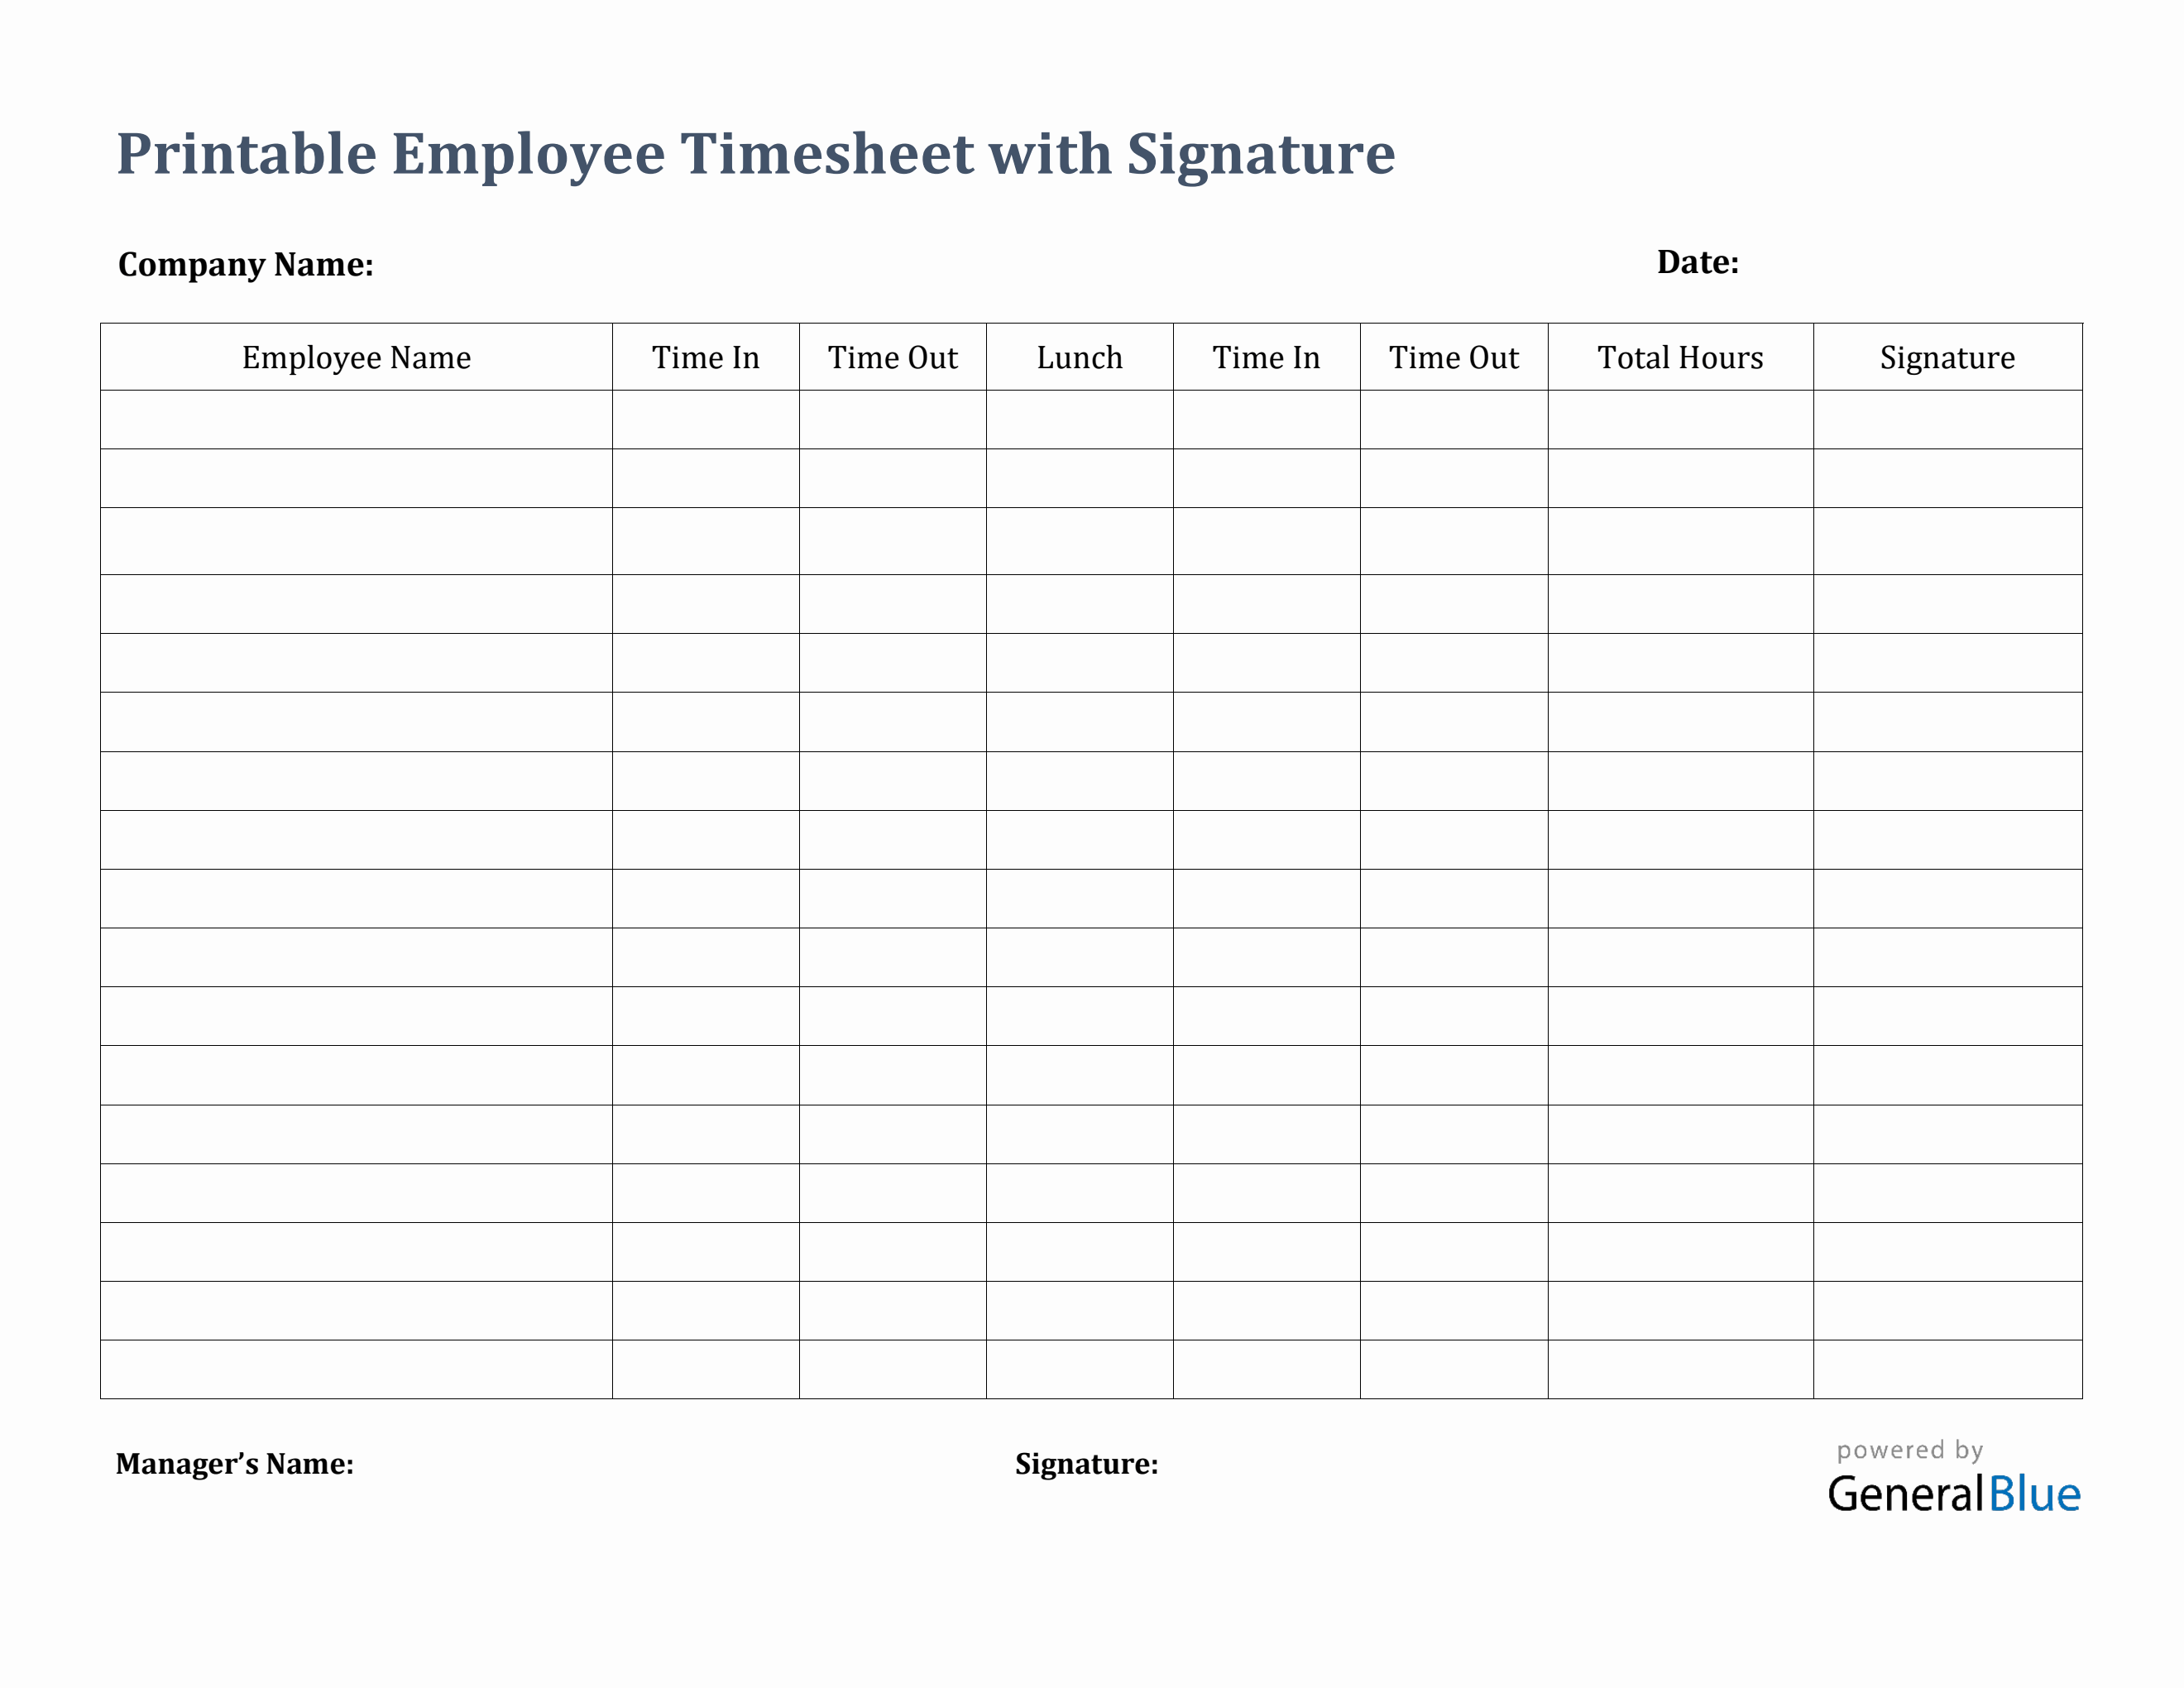 printable-employee-timesheet-with-signature